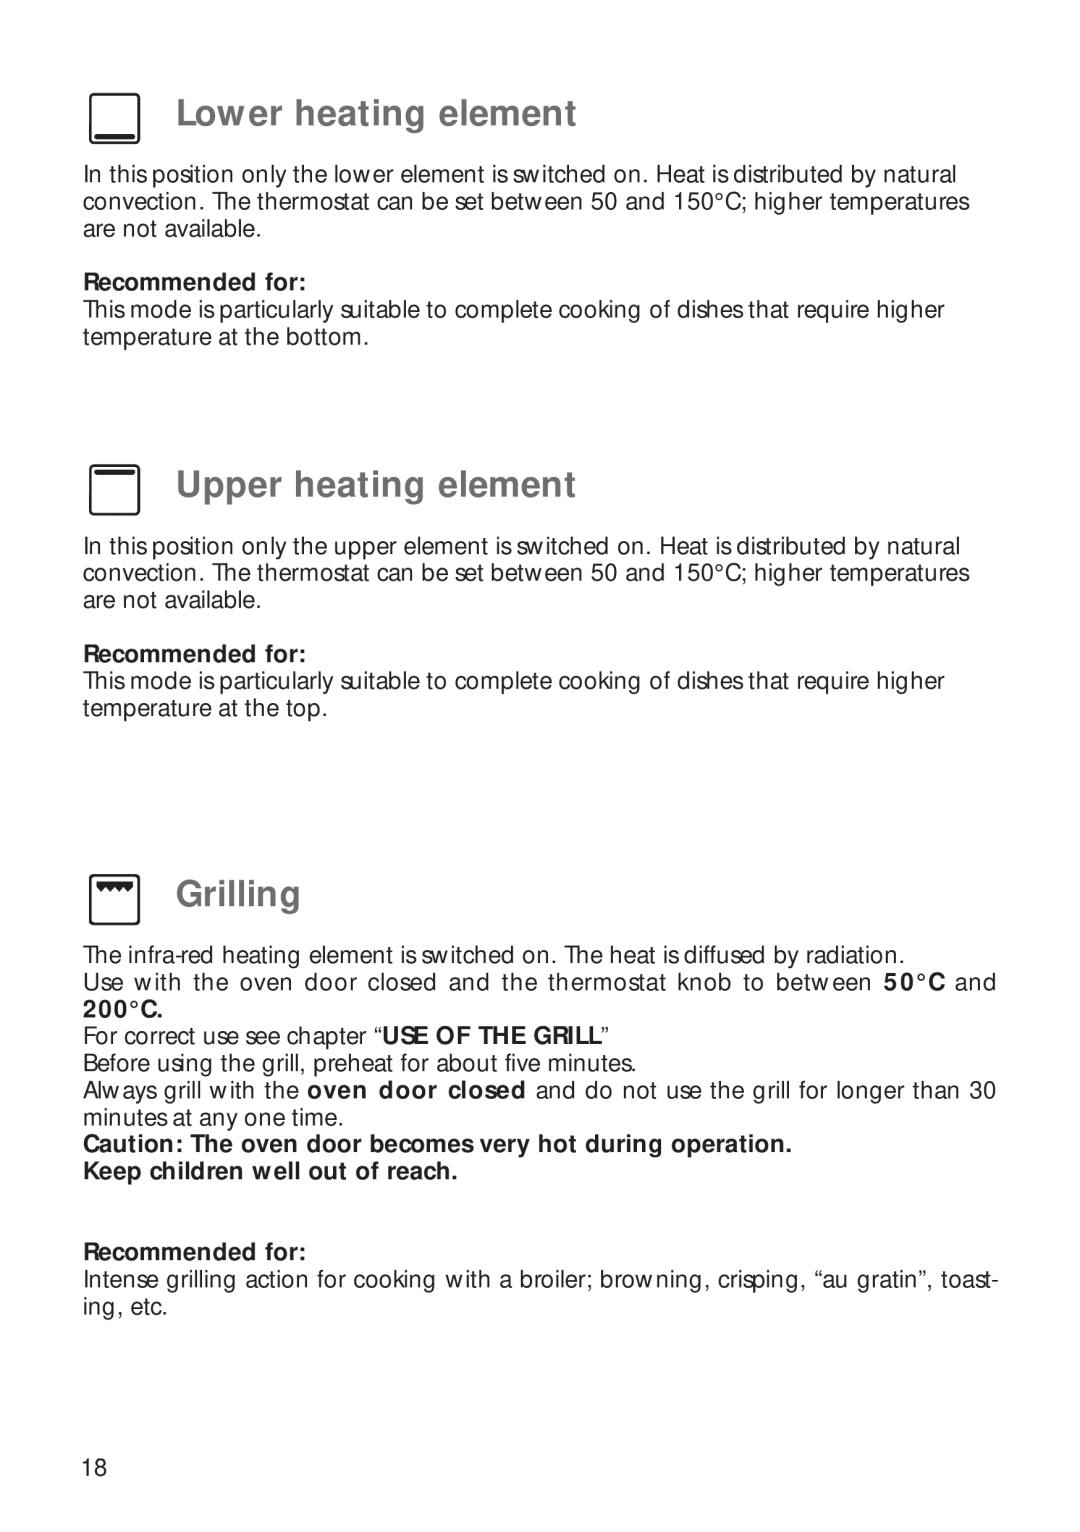 CDA RV 700 installation instructions Lower heating element, Upper heating element, Grilling 